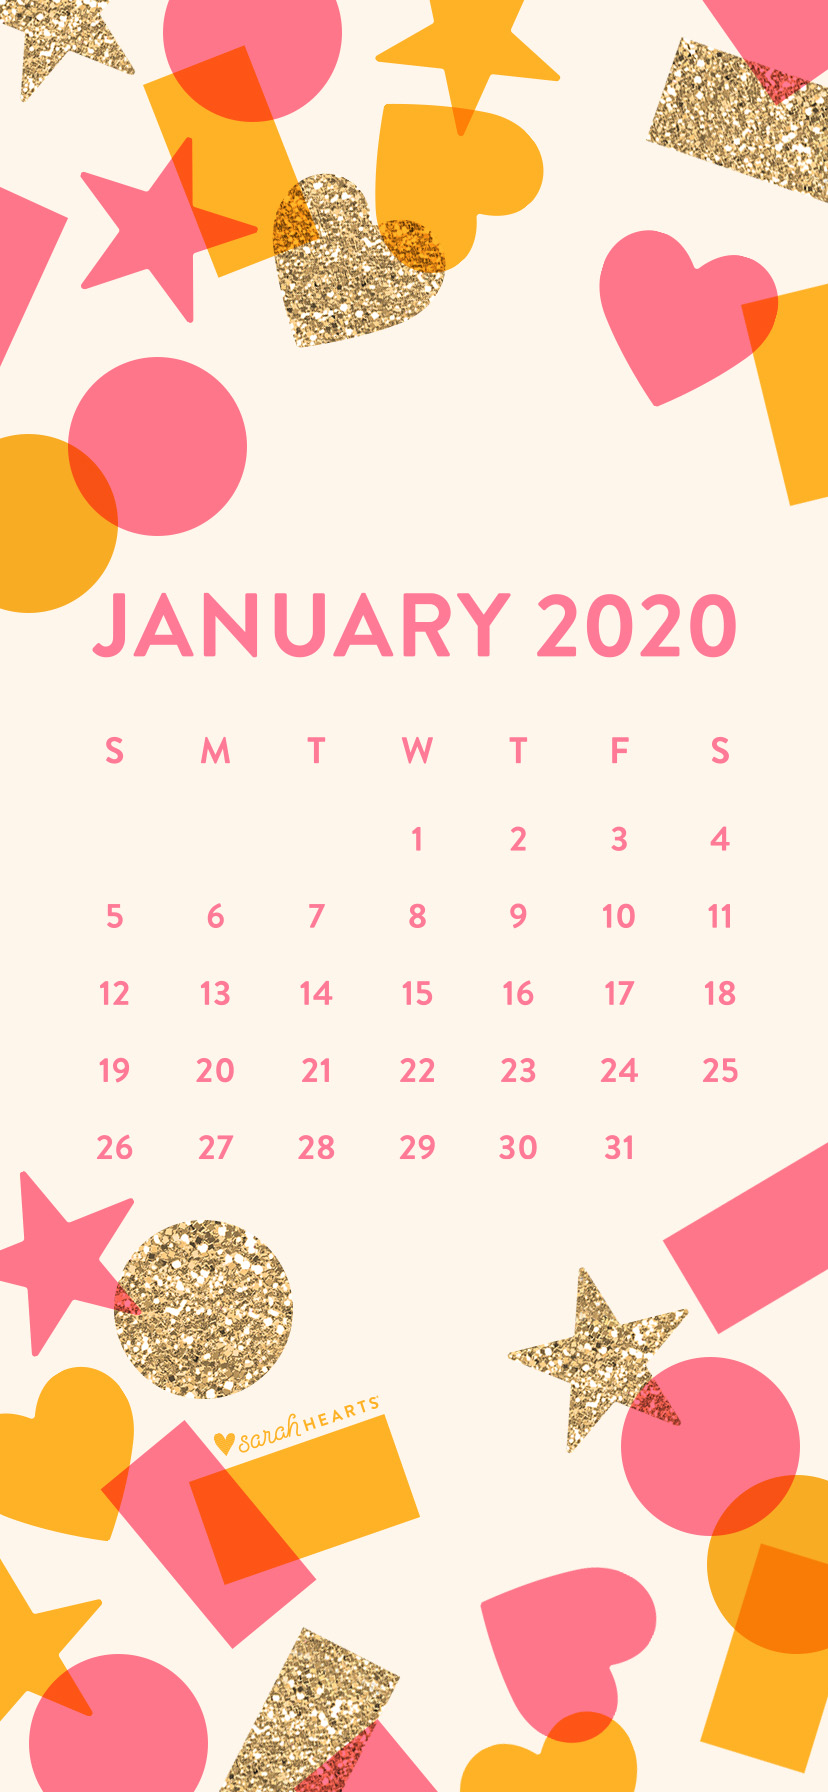 January 2020 Confetti Calendar